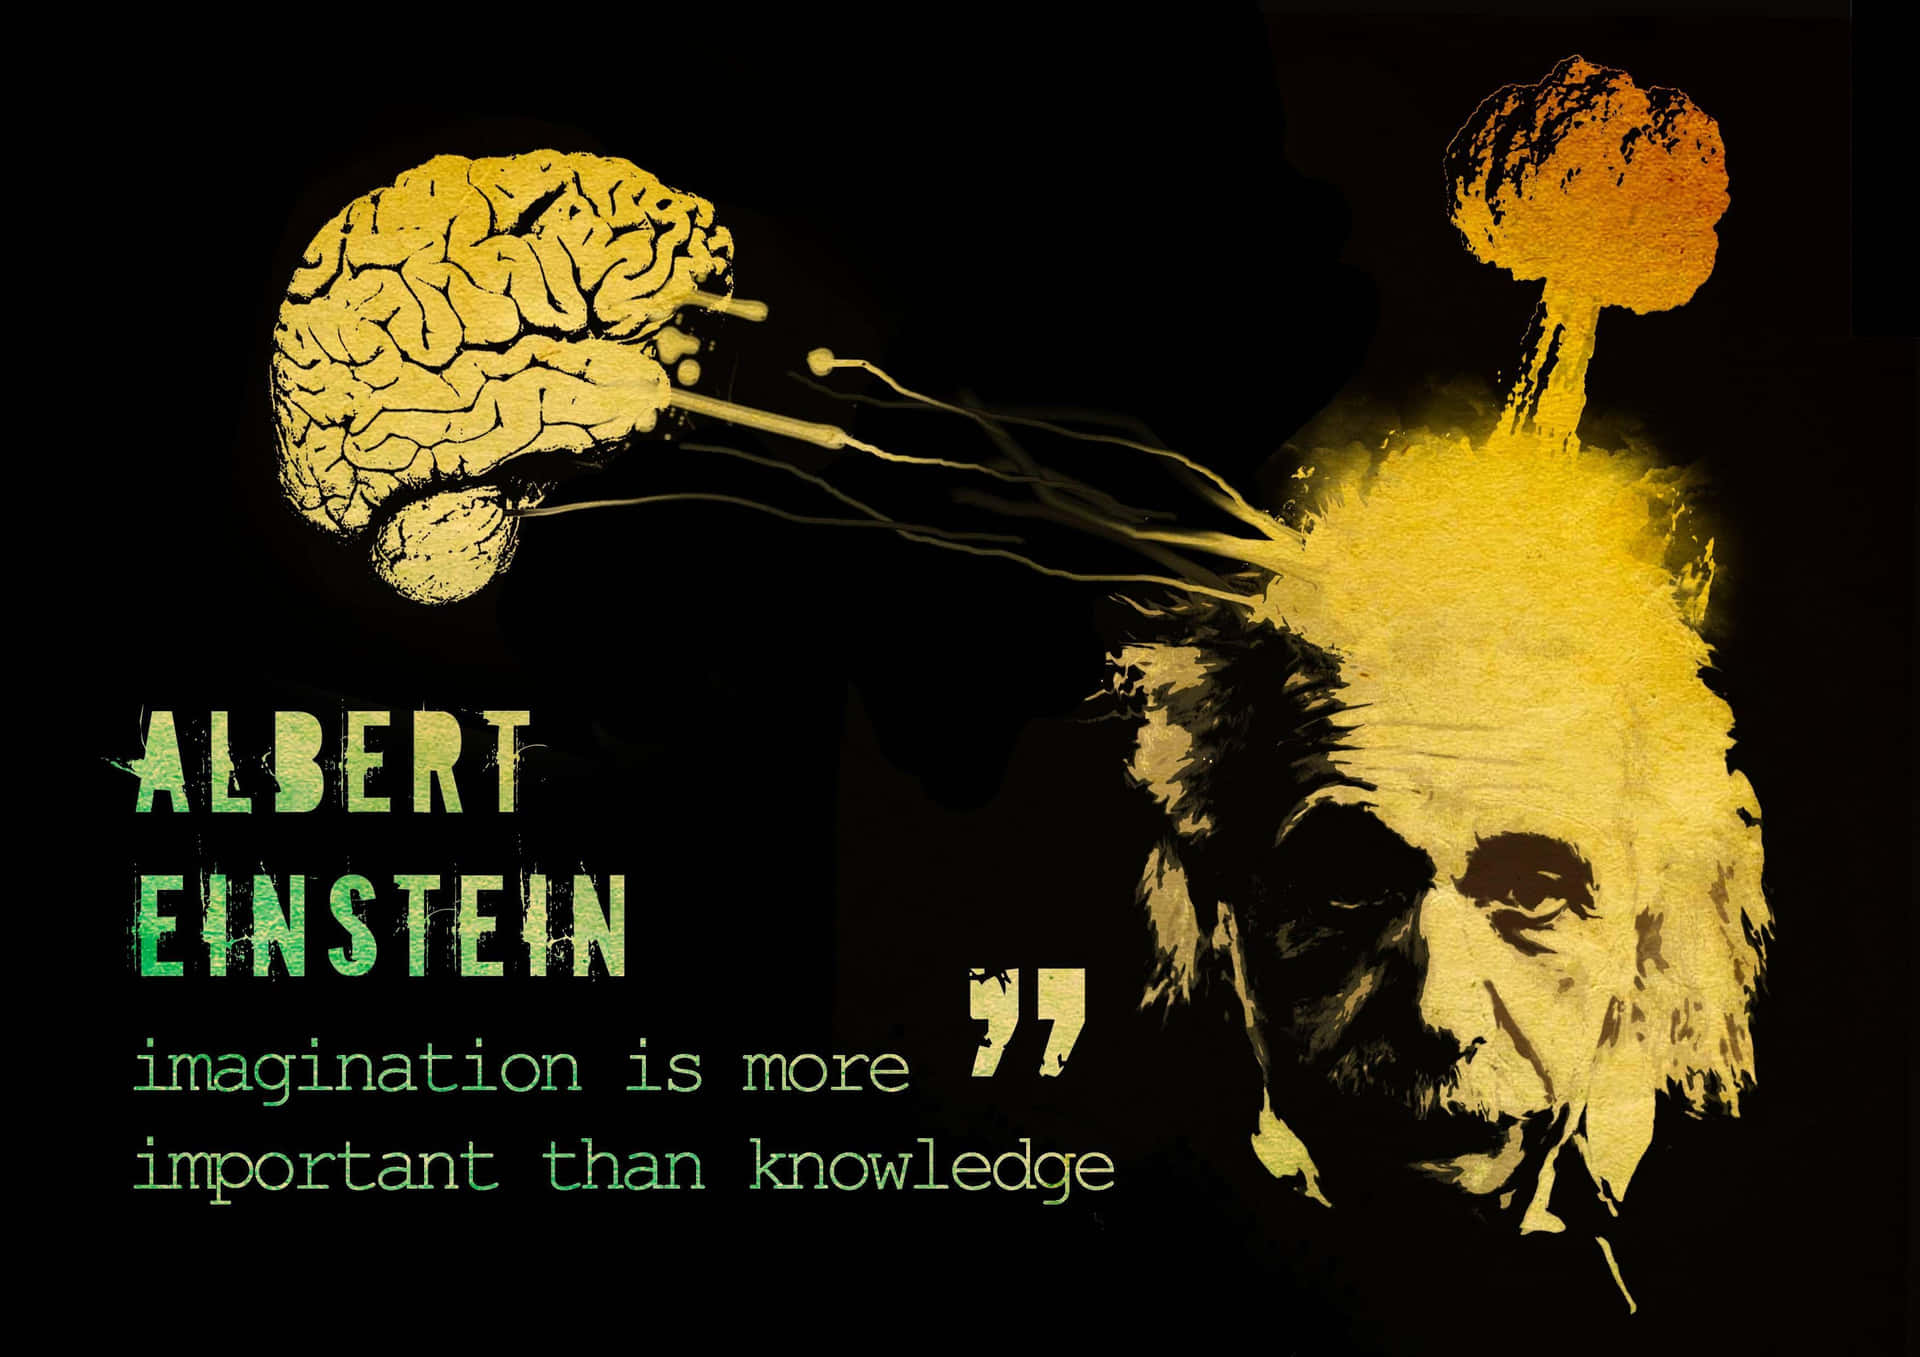 Einstein Imagination More Important Than Knowledge Artwork Wallpaper